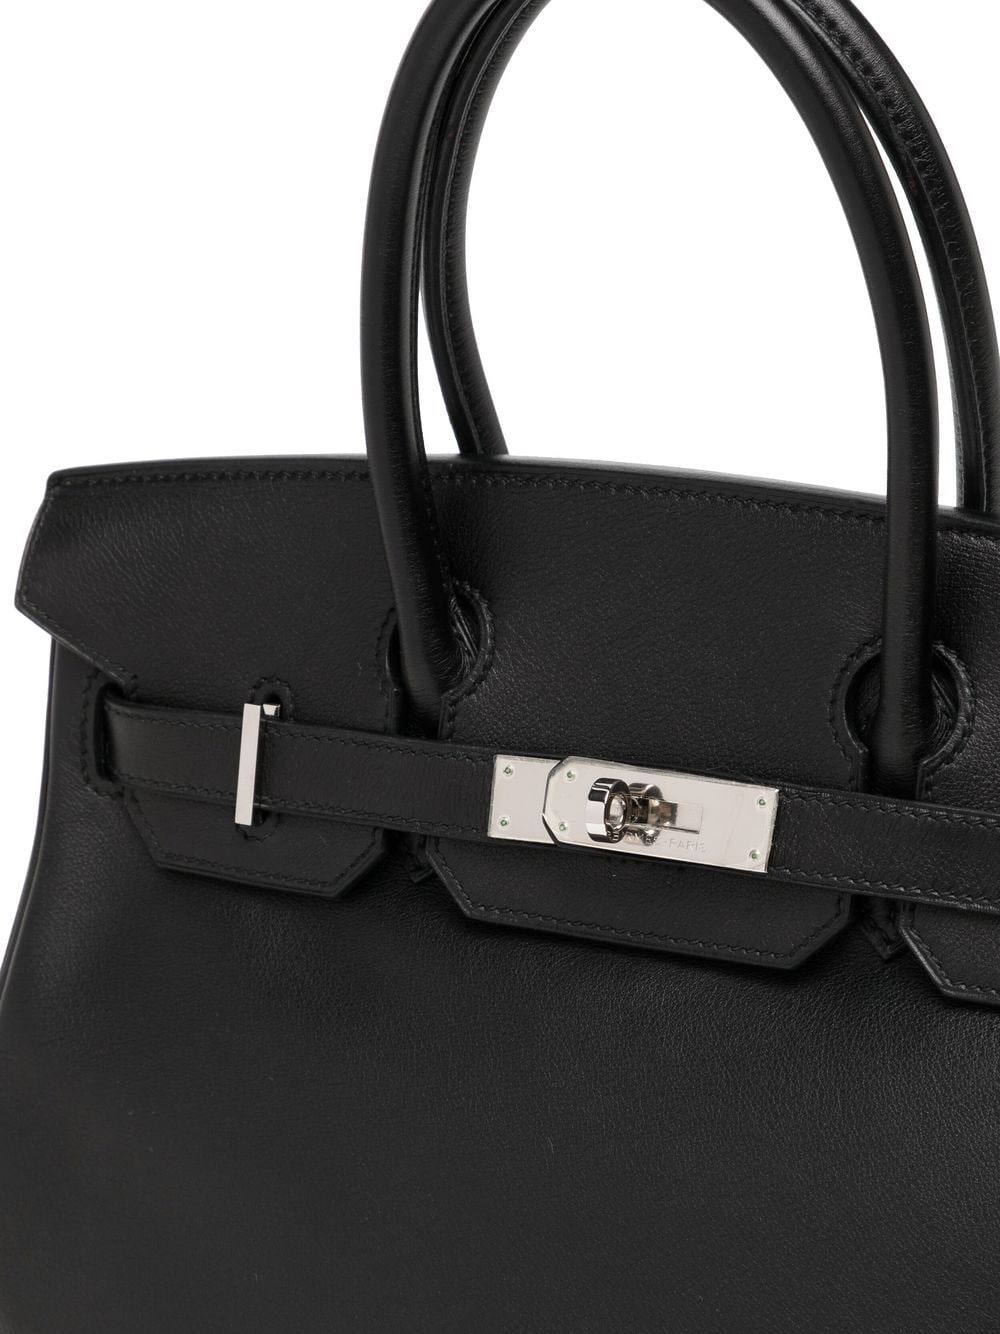 Hermès Birkin Handbag 393795